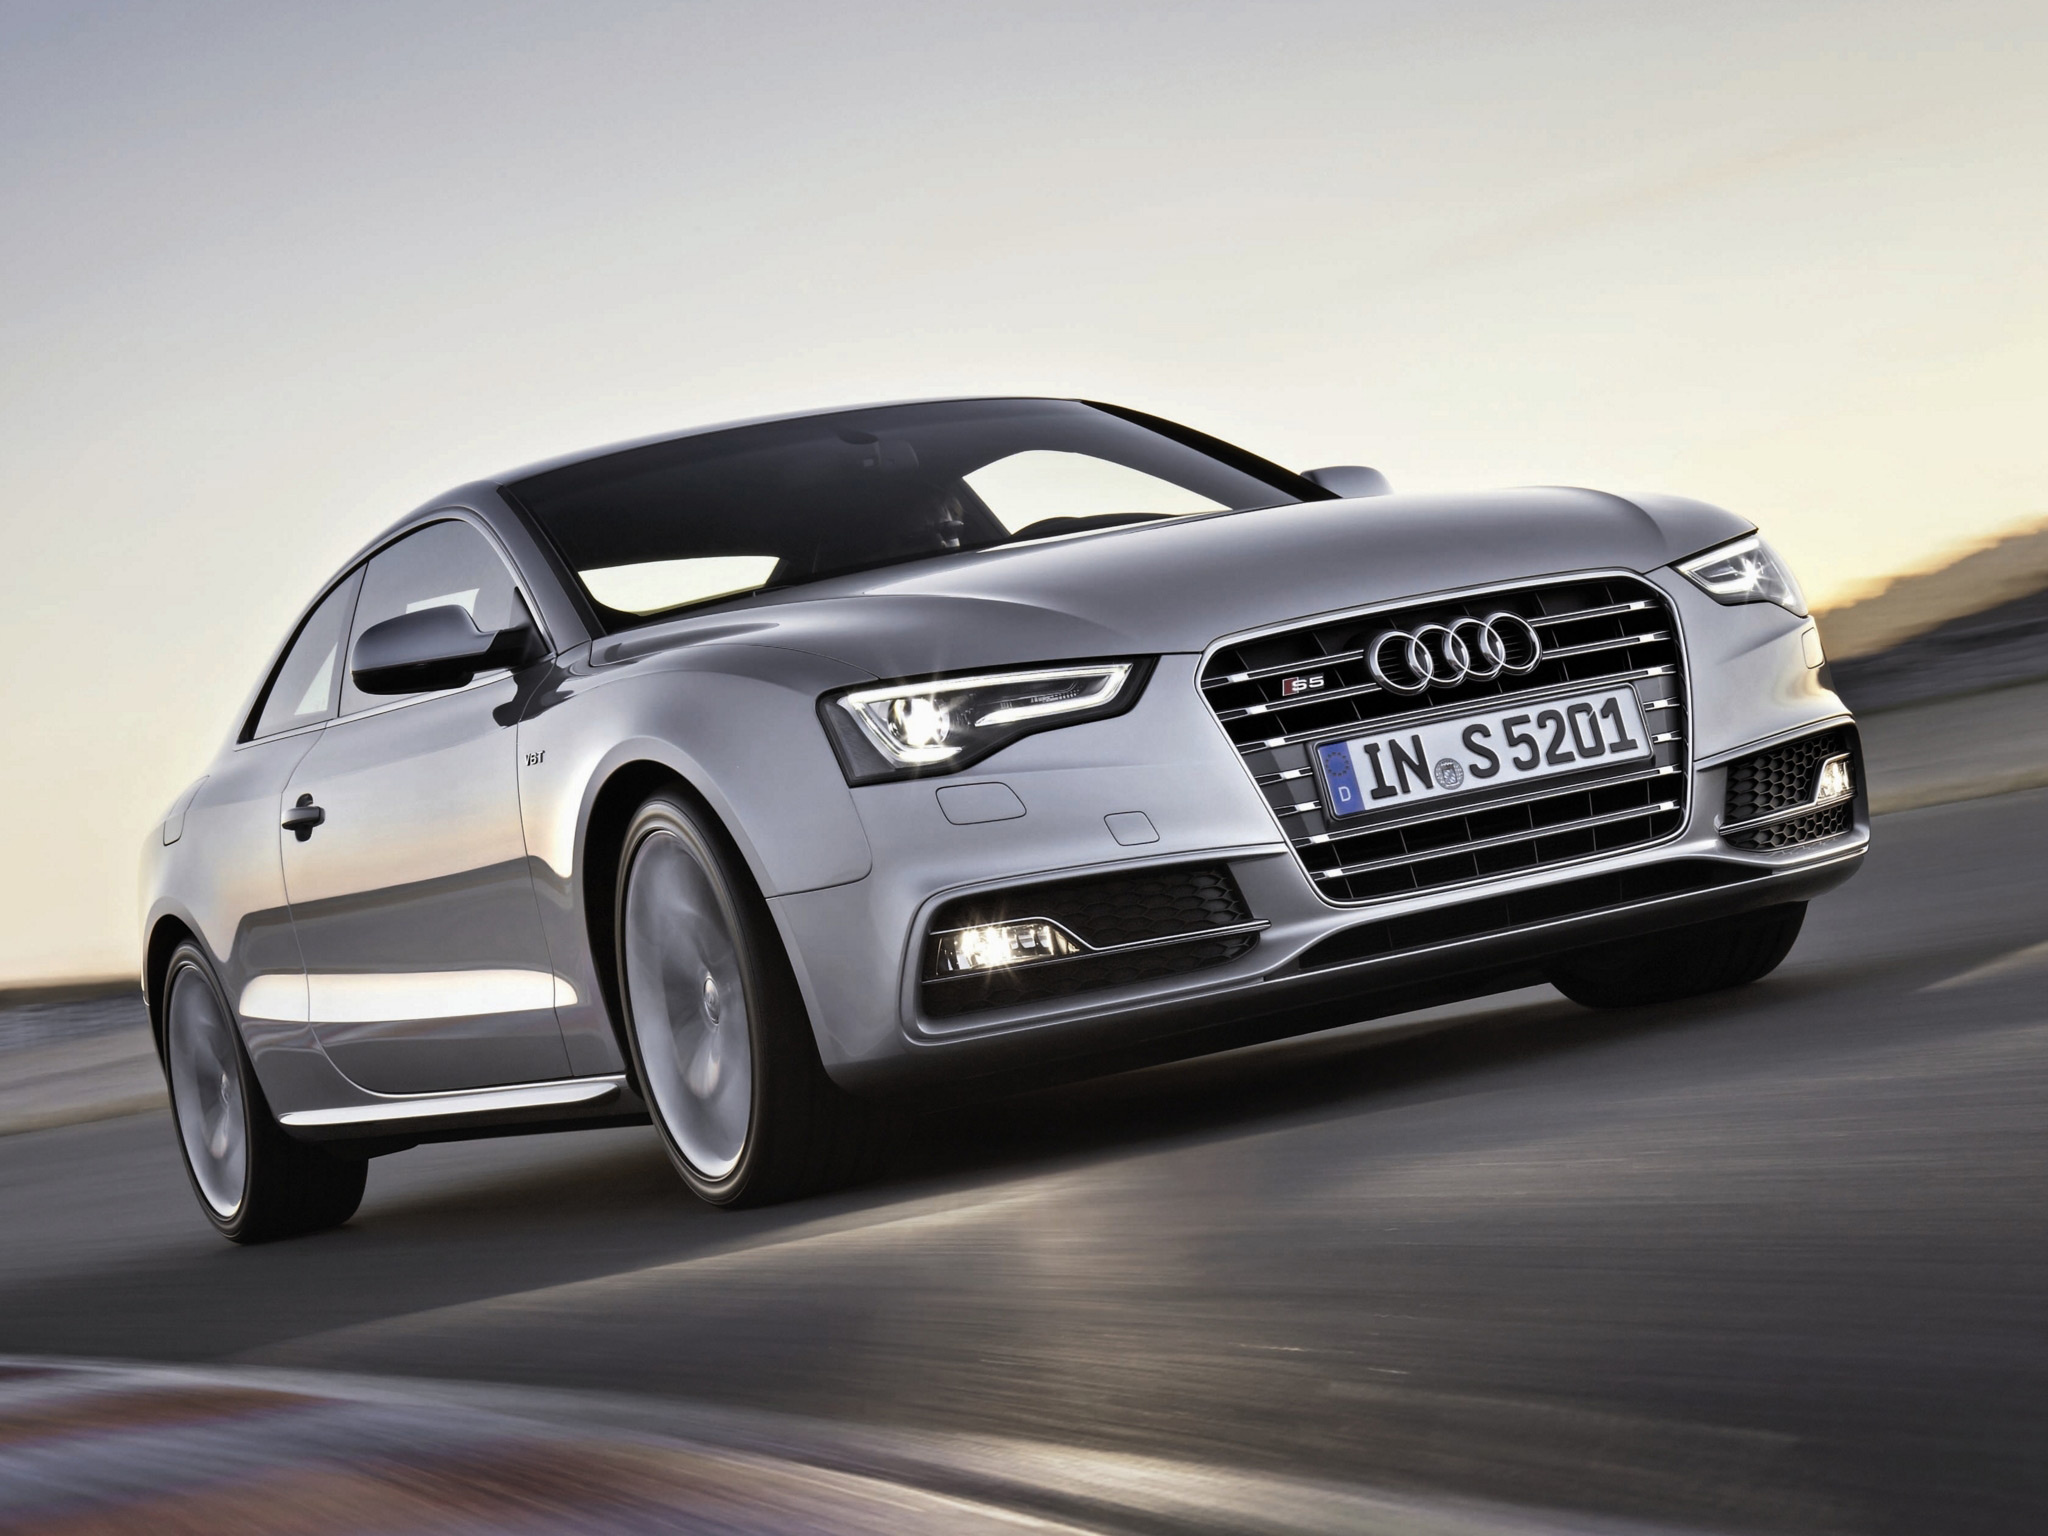 Audi S5, 2012 model, High-resolution wallpapers, Classic design, 2050x1540 HD Desktop